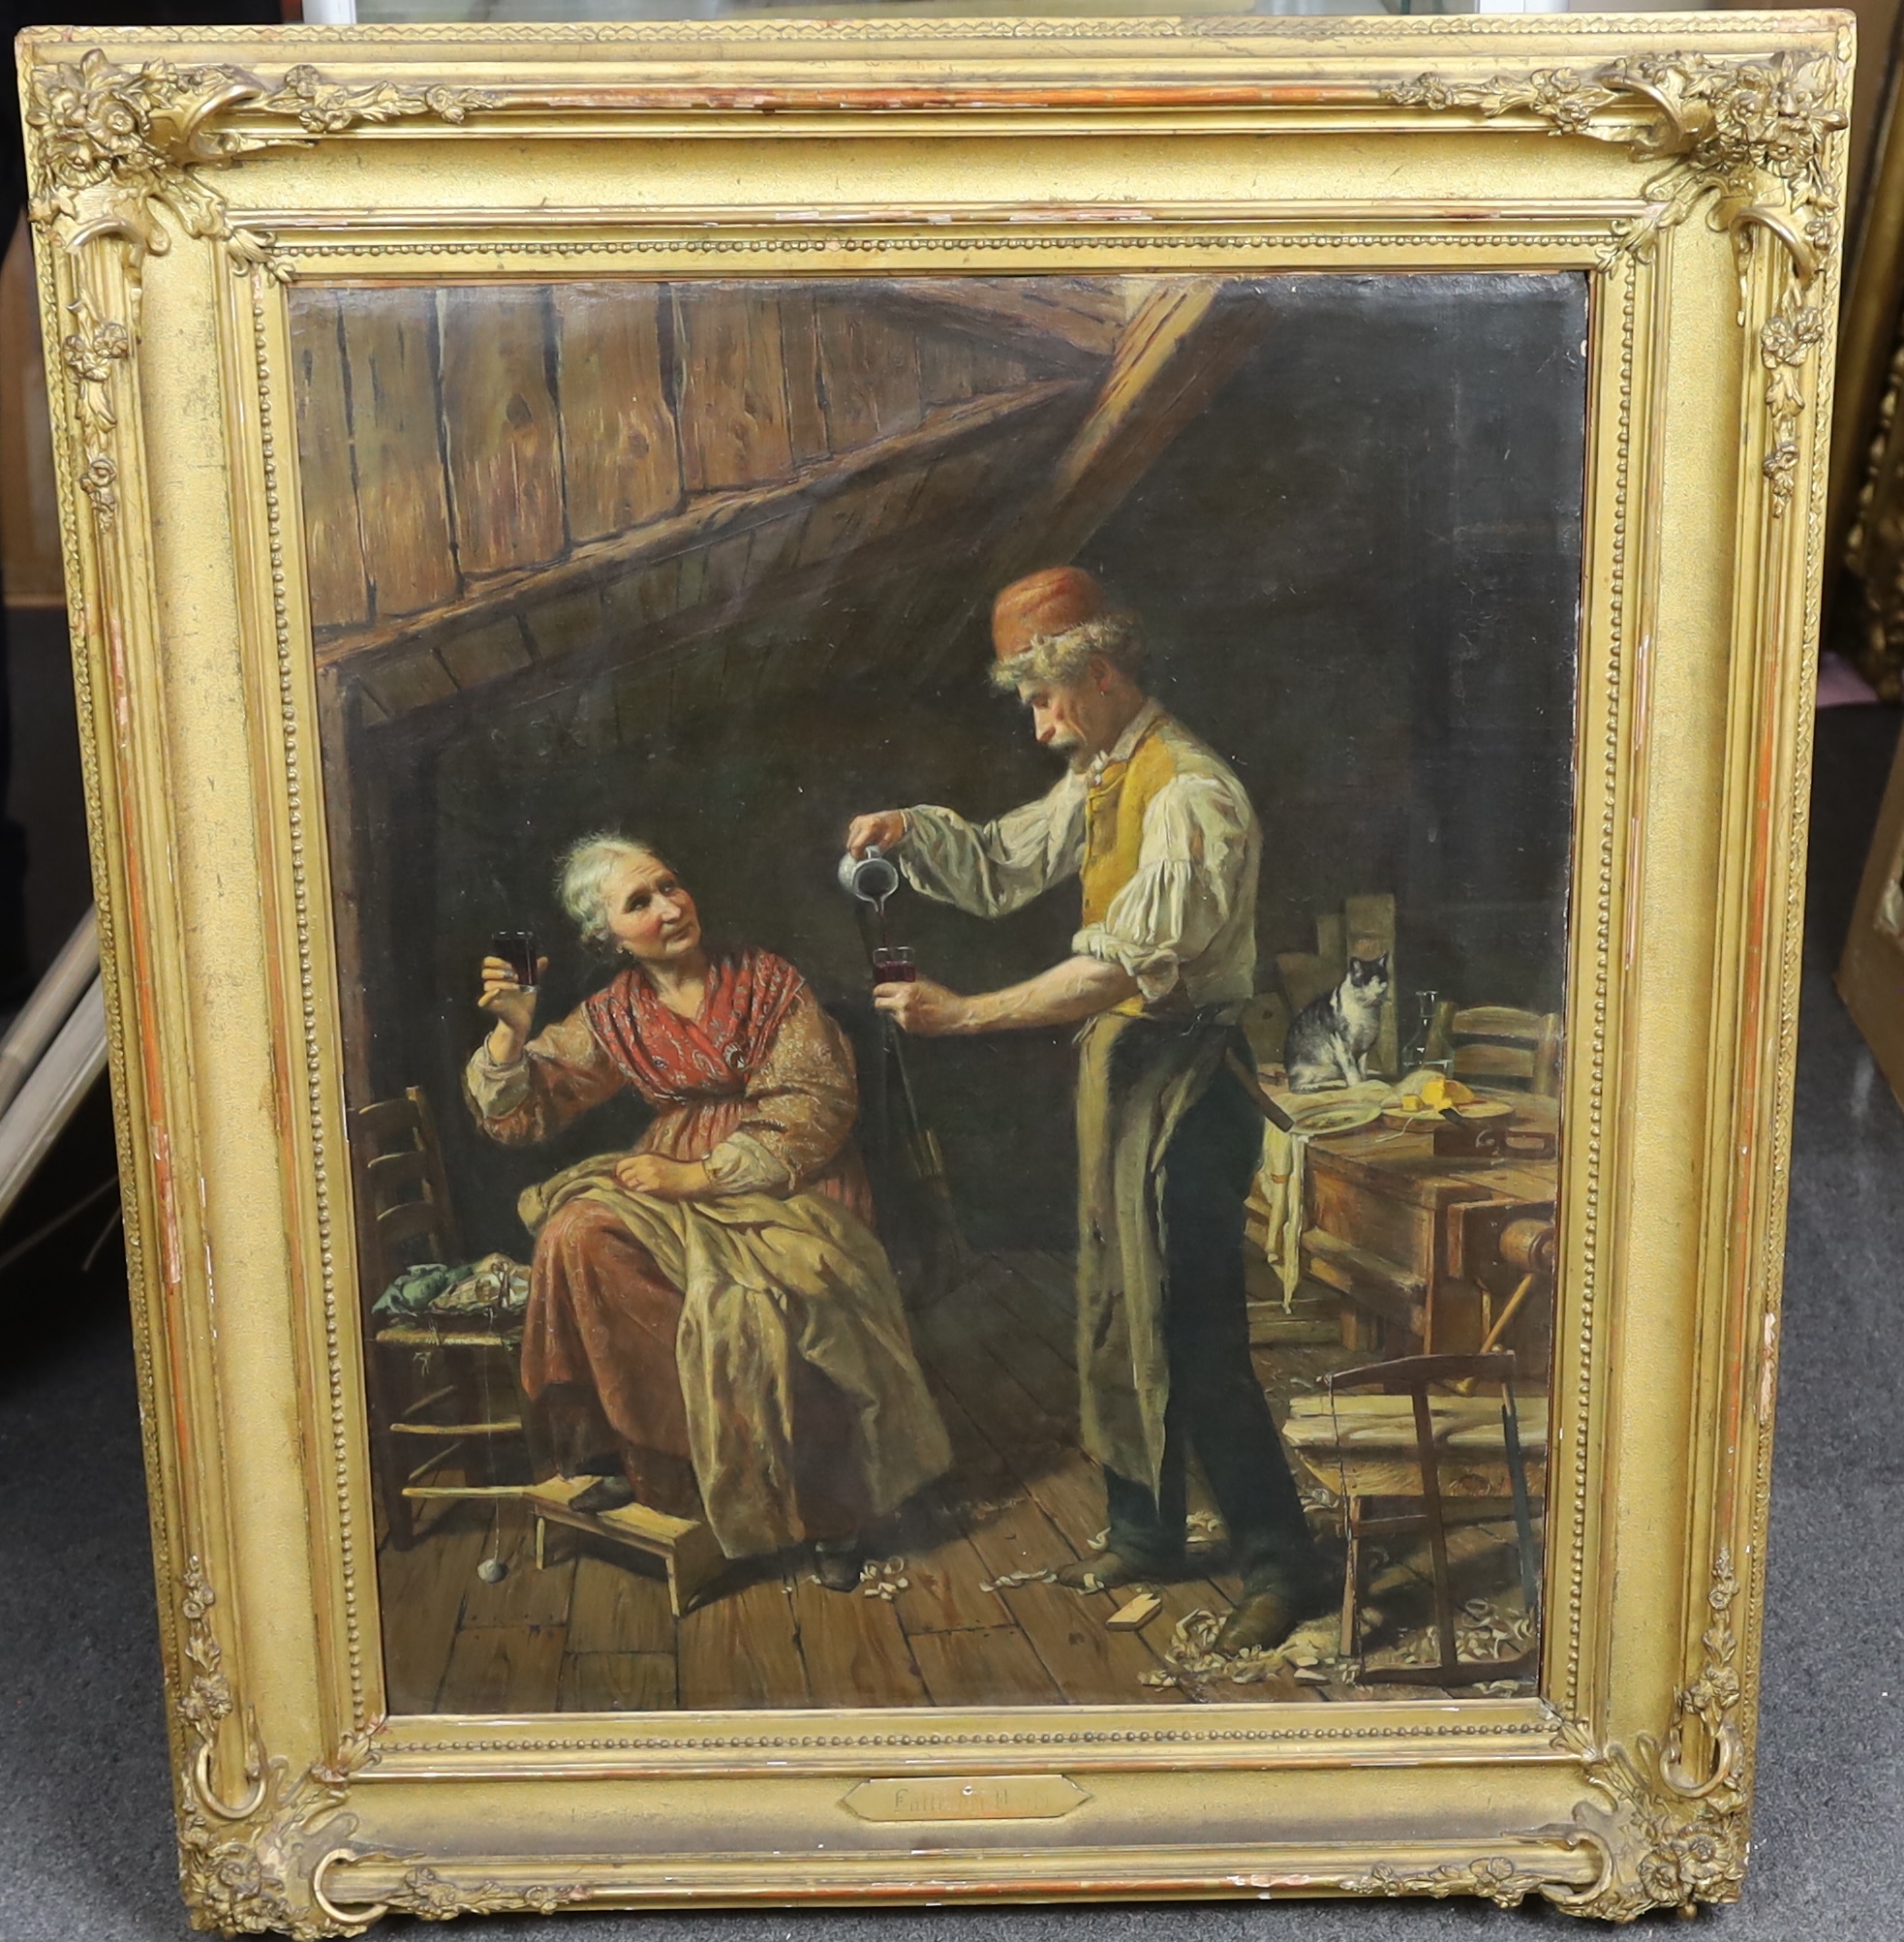 Gian Francesco Locatelli (Italian, 1810-1882), oil on canvas, Interior with couple drinking wine, signed, 76 x 62cm. Condition - fair